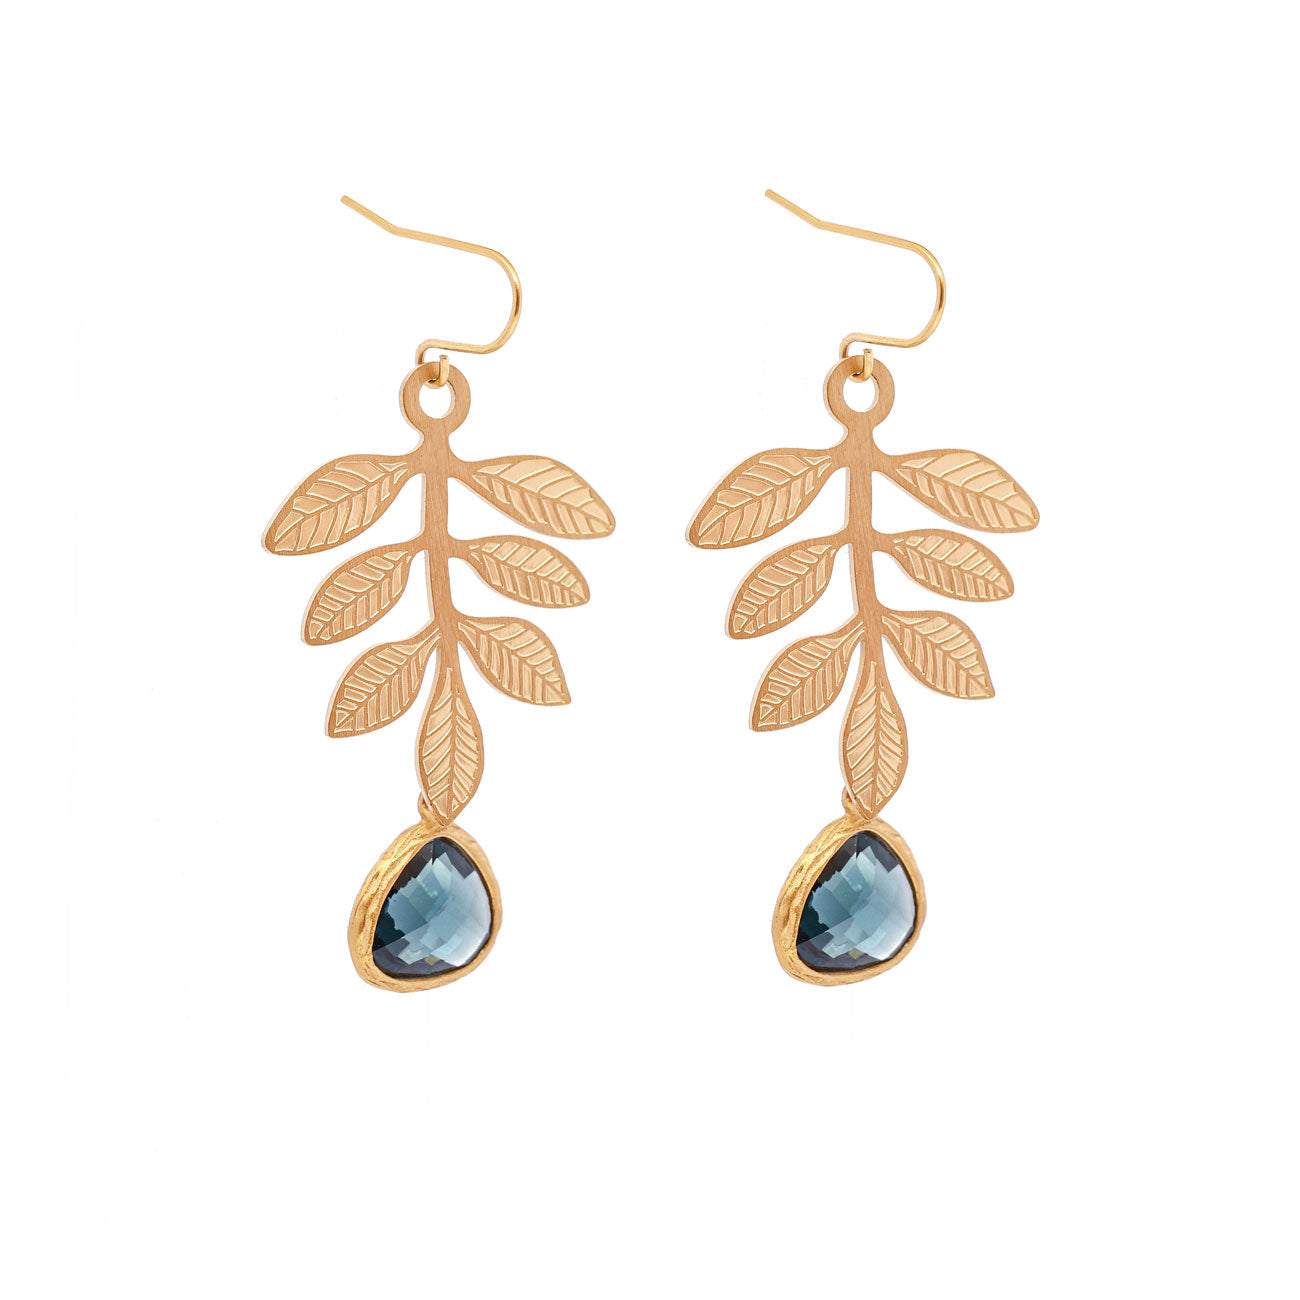 Paula floral earrings, Denim blue